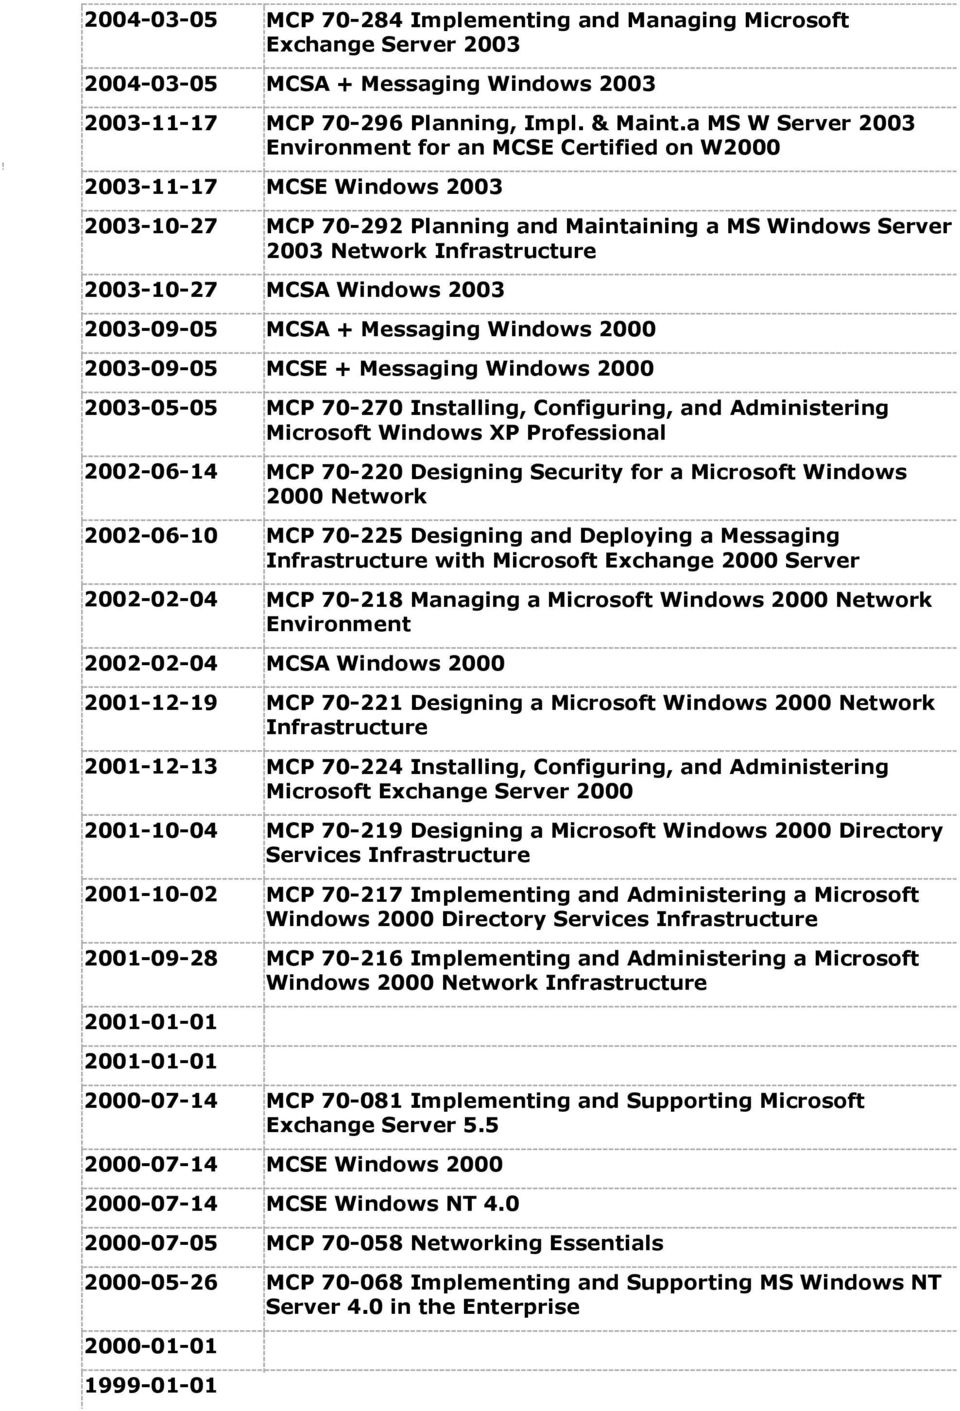 MCSA Windows 2003 2003-09-05 MCSA + Messaging Windows 2000 2003-09-05 MCSE + Messaging Windows 2000 2003-05-05 MCP 70-270 Installing, Configuring, and Administering Microsoft Windows XP Professional